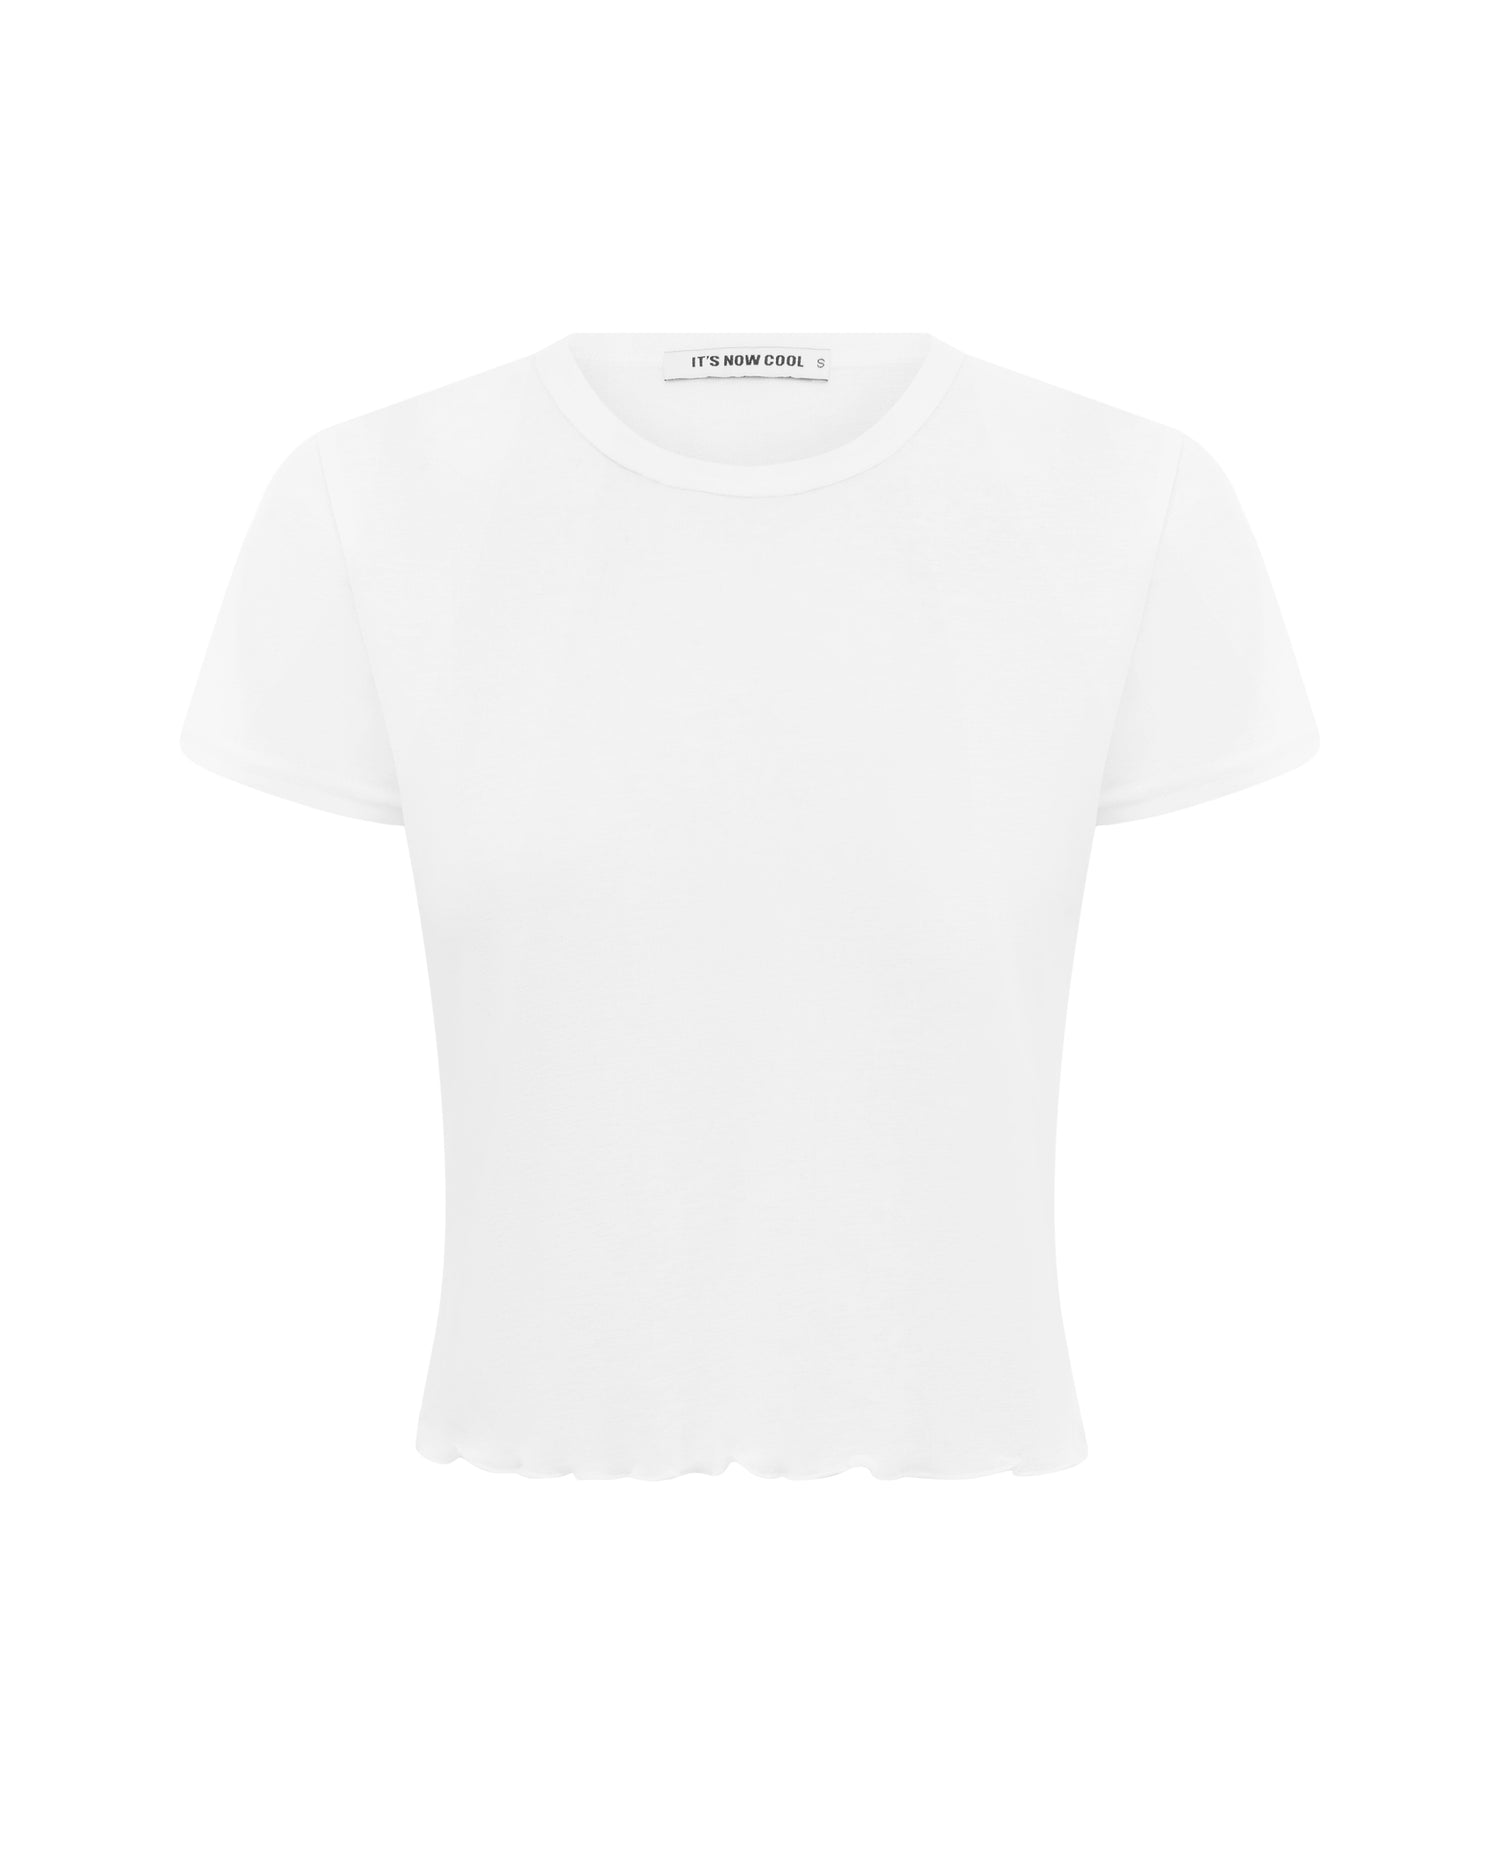 It's Now Cool Beachwear - Camiseta de malla - Blanca